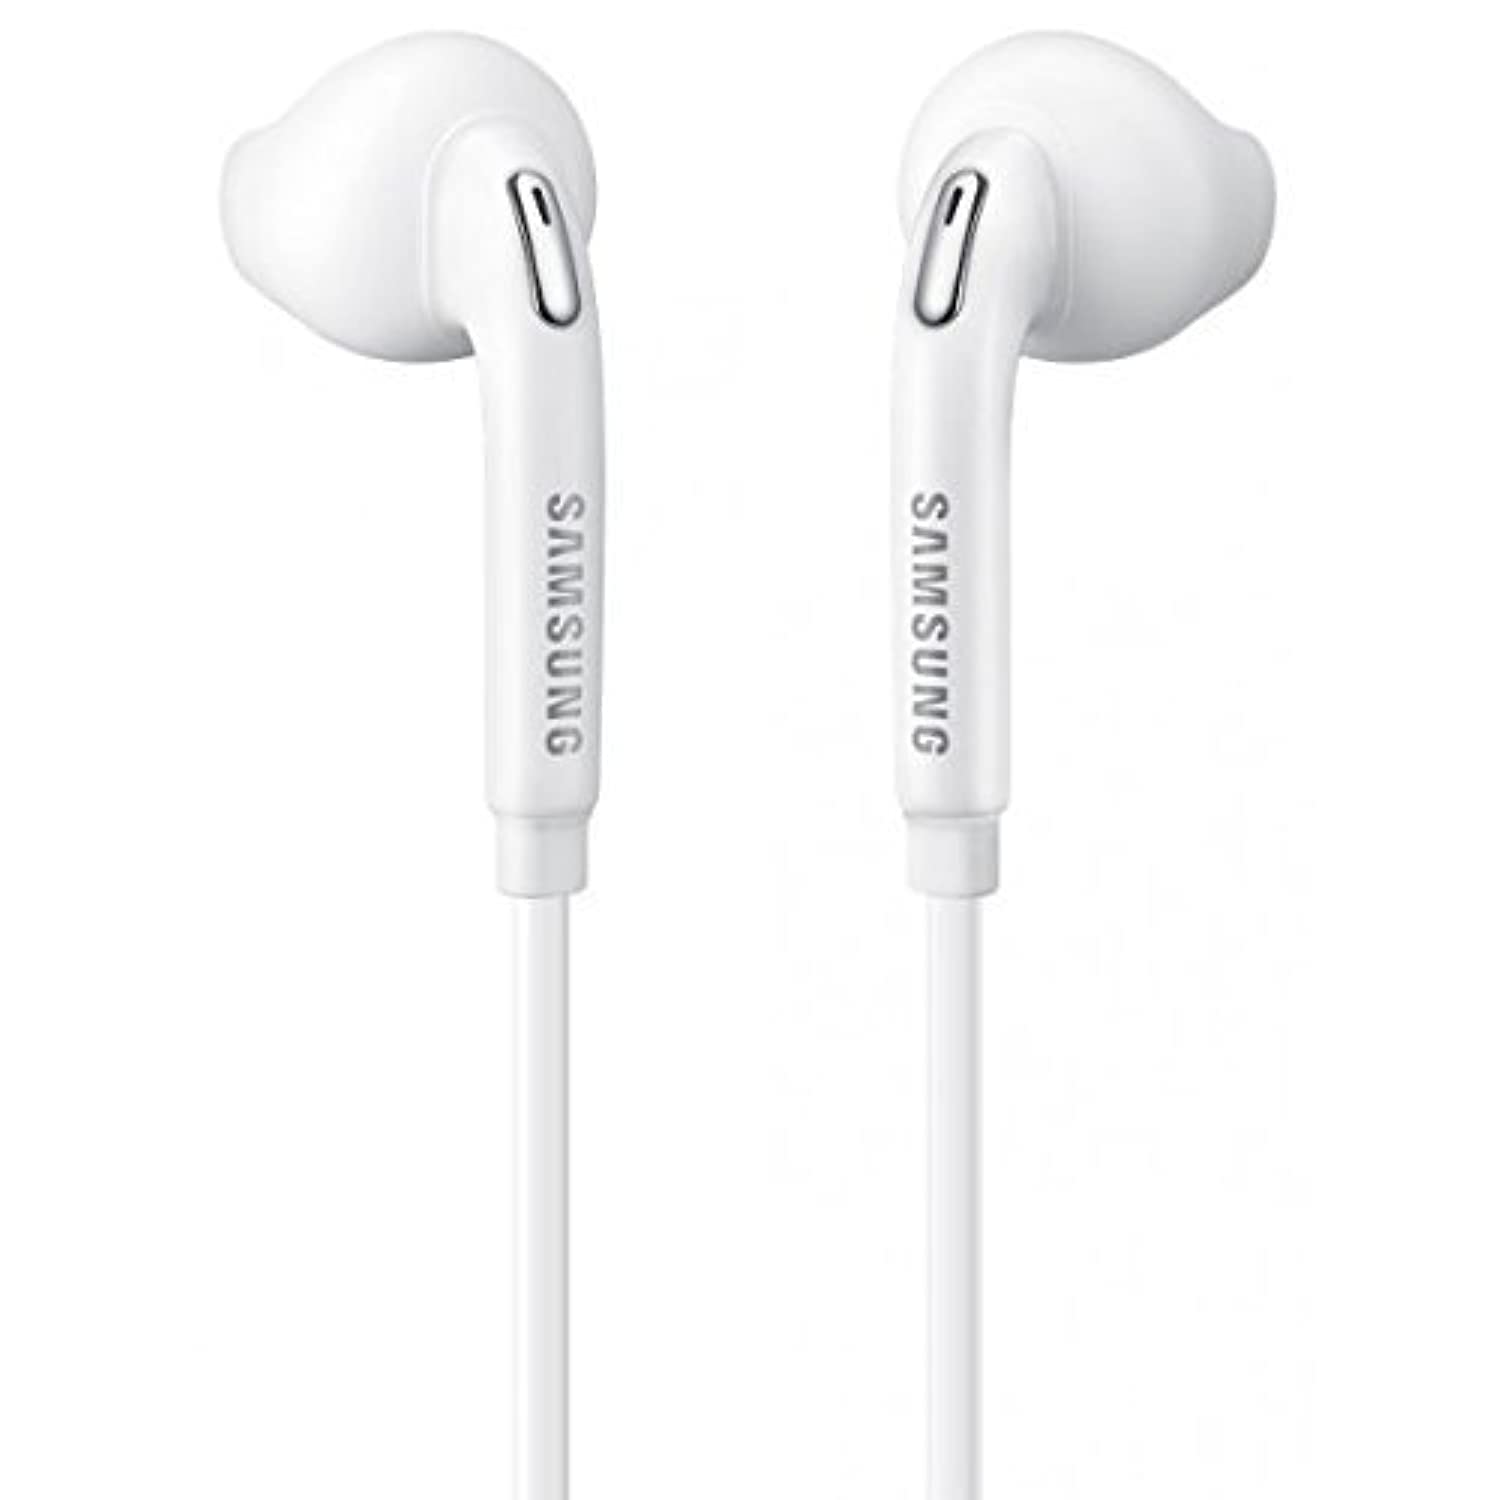 Samsung Eo-Eg920Bw Auriculares blancos/Manos libres/Auriculares/Auriculares con control de volumen para teléfonos Galaxy (Empaque no minorista - Empaque a granel)